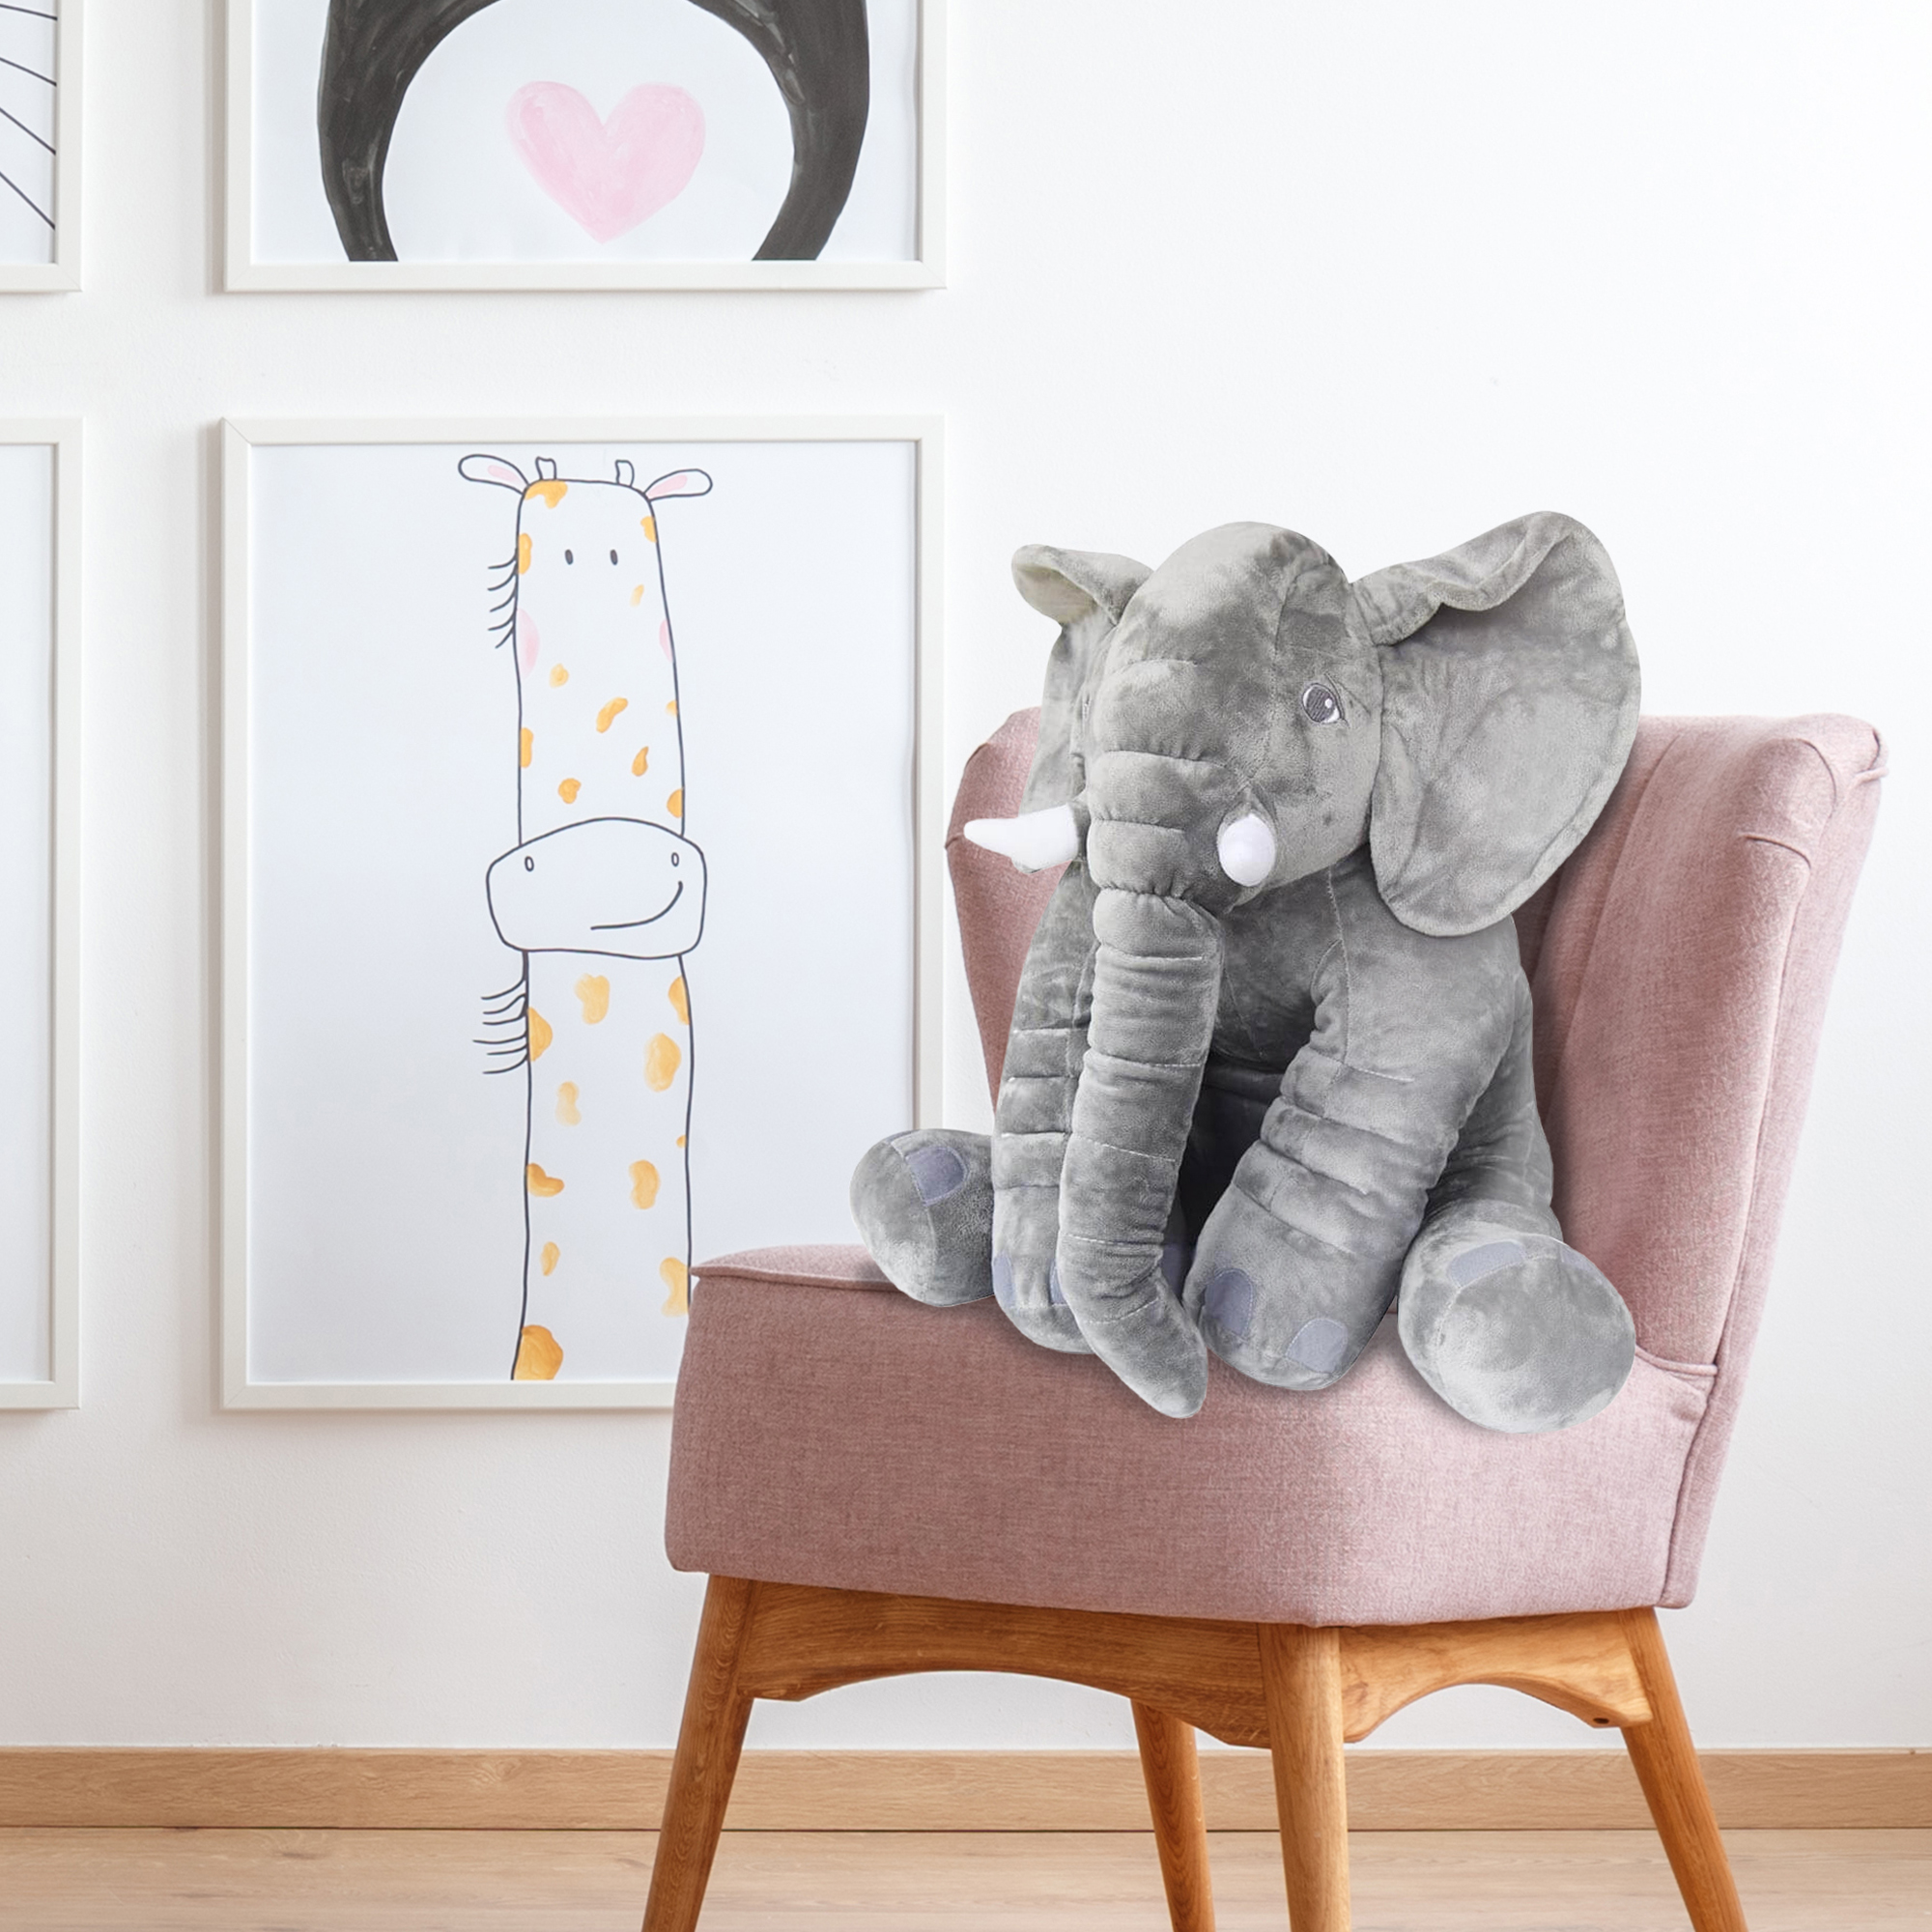 Plüschtier Elefant 2in1 - Baby Kuschelkissen & Kinderspielzeug